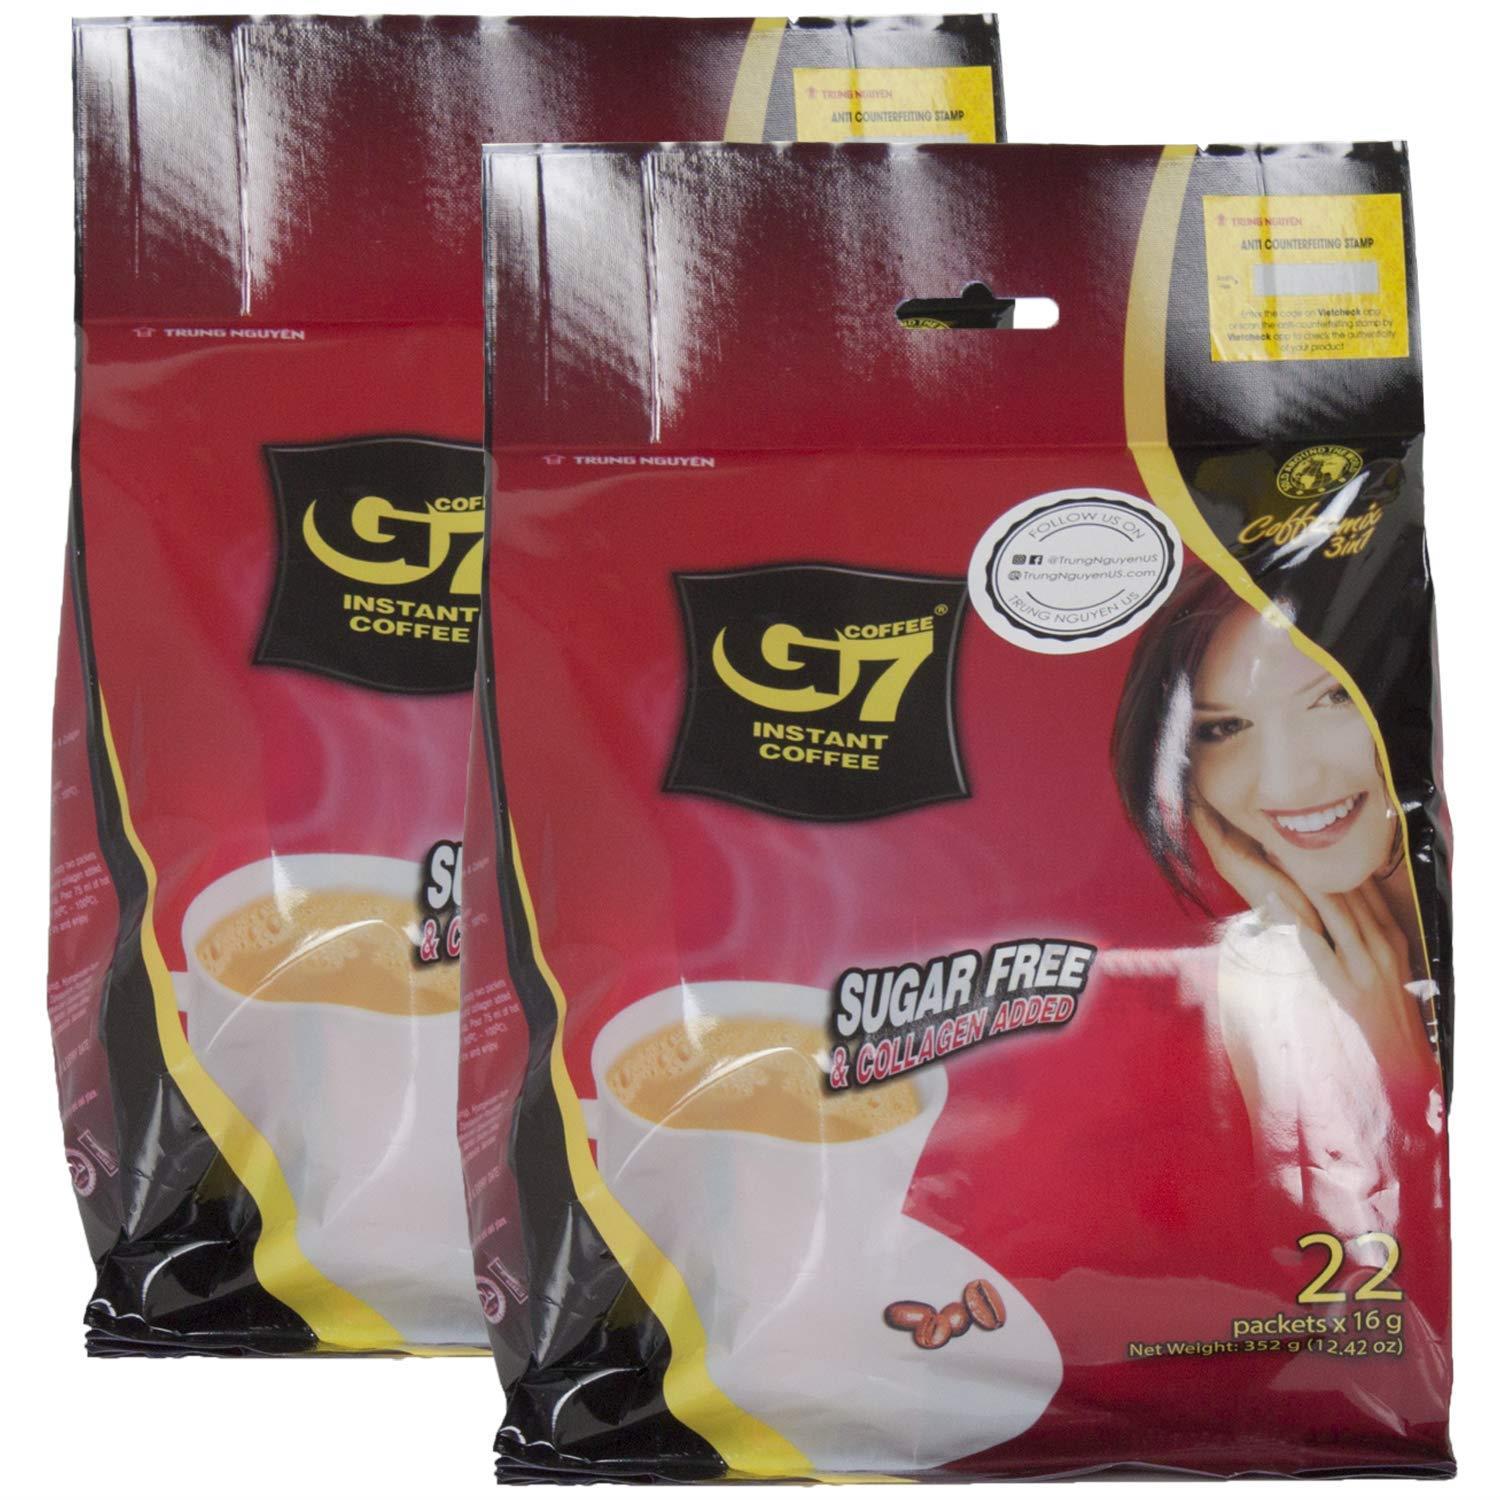 Trung Nguyen G7 Instant Coffee - 44-Pieces (2-Pack of 22 Packets) - Collagen & Sugar-Free Coffee - Rich Taste, Dark Roast